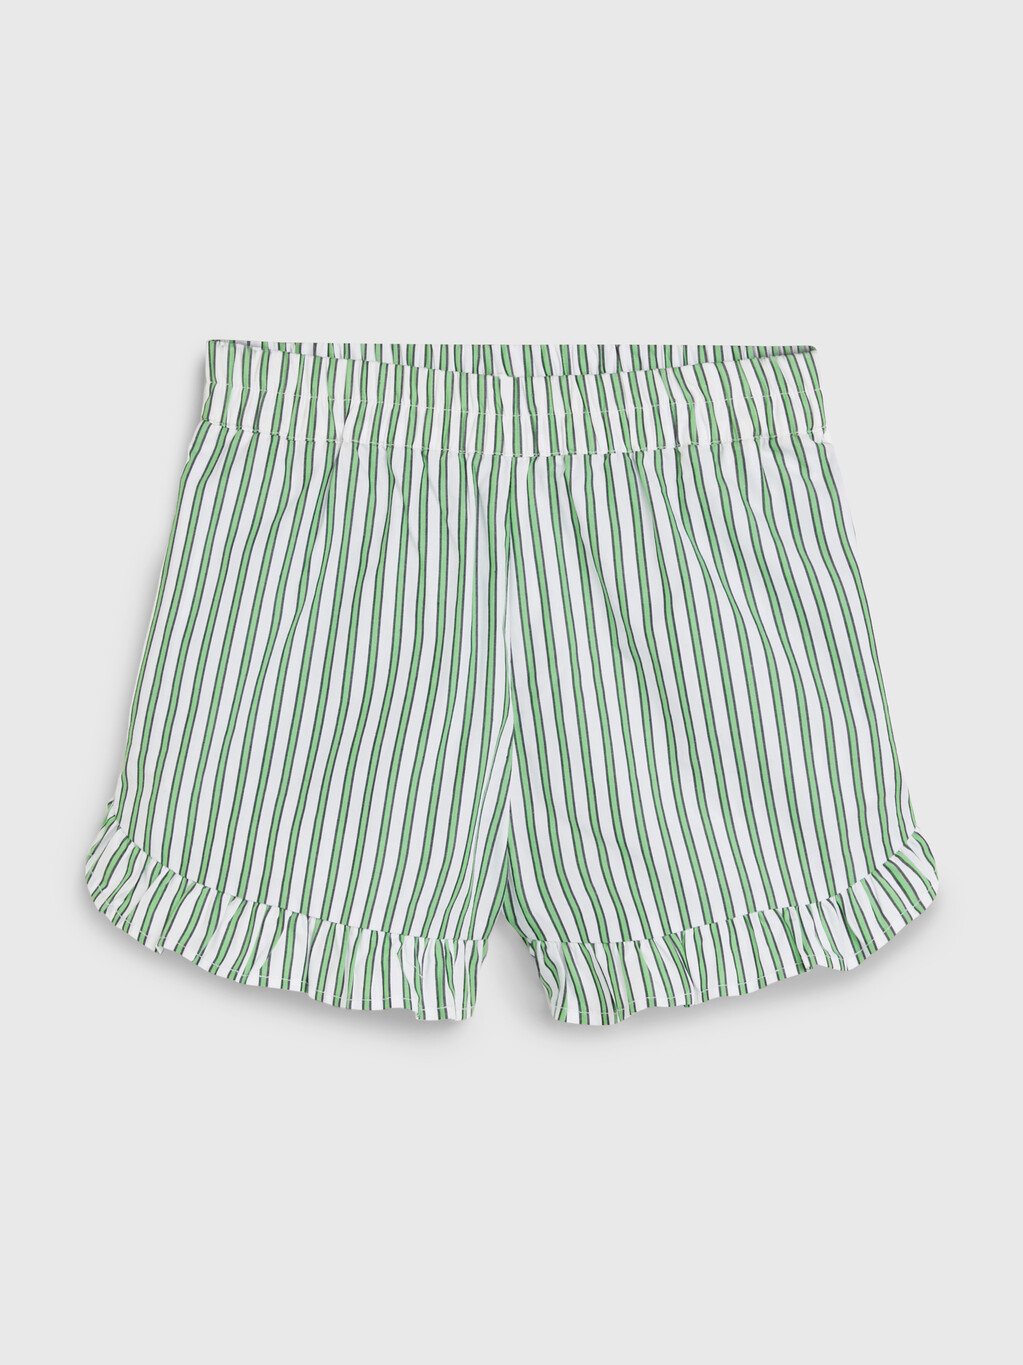 條紋荷葉邊短褲, Spring Lime Stripe, hi-res